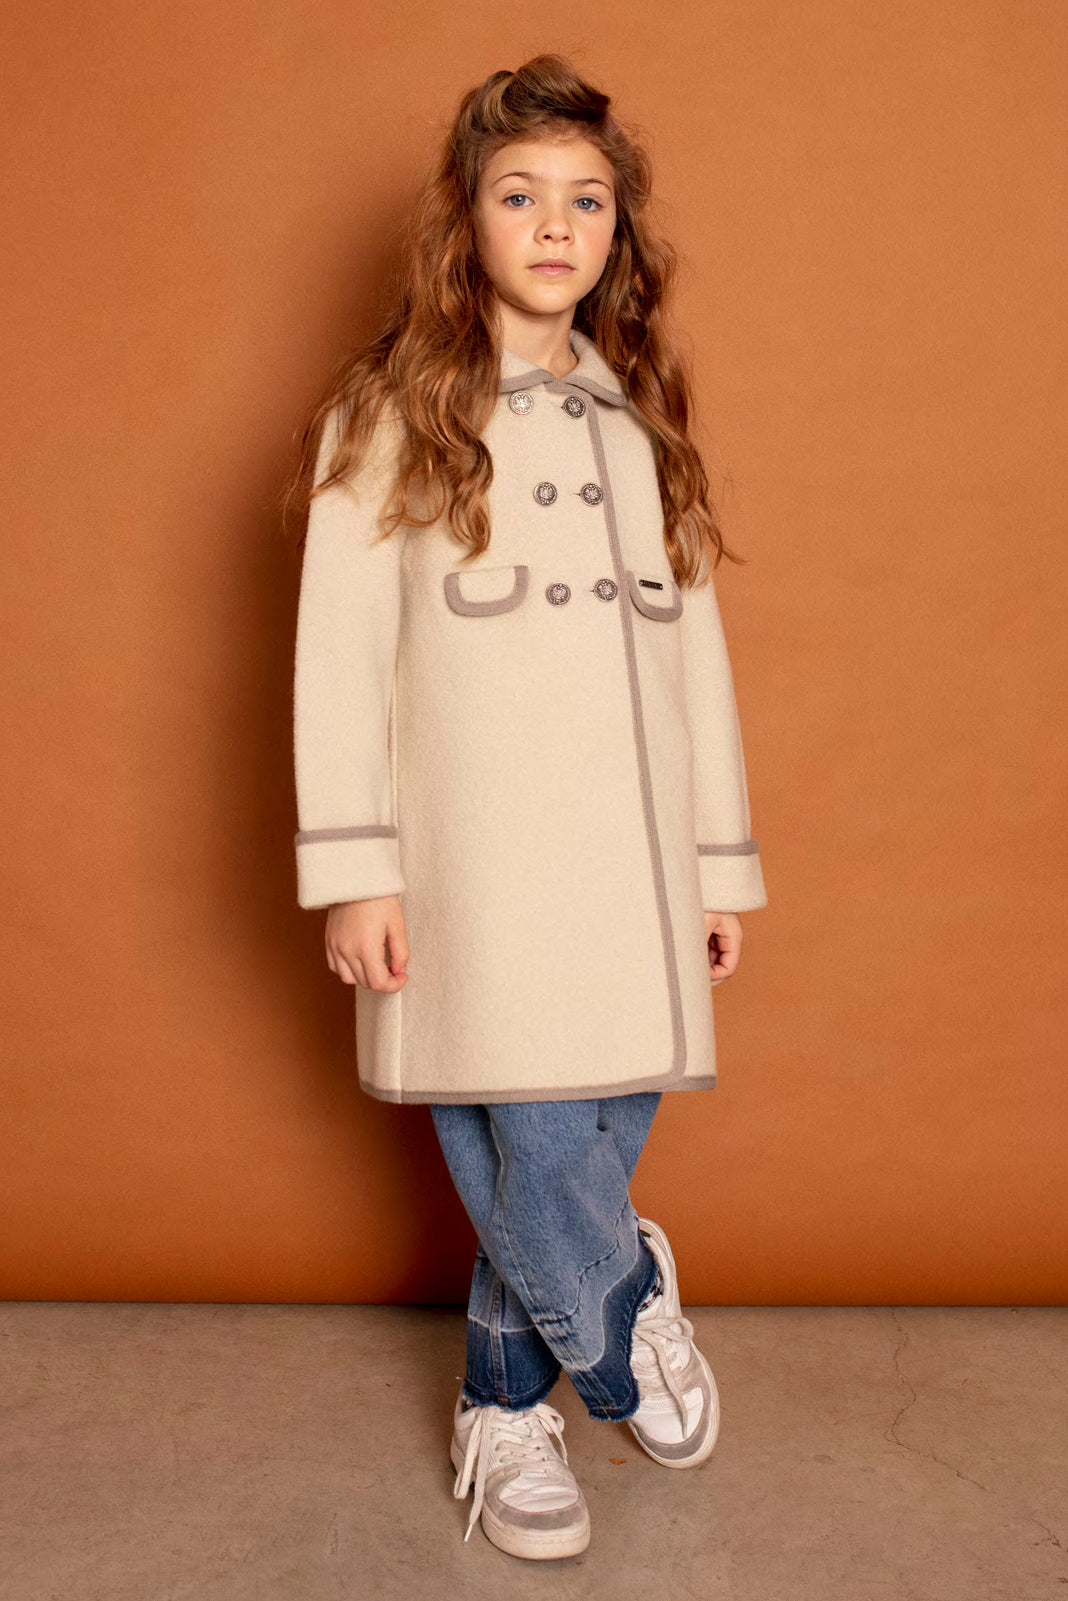 MARAE Kids PREORDER "Charlotte" Ivory & Camel Merino Wool Coat | Millie and John